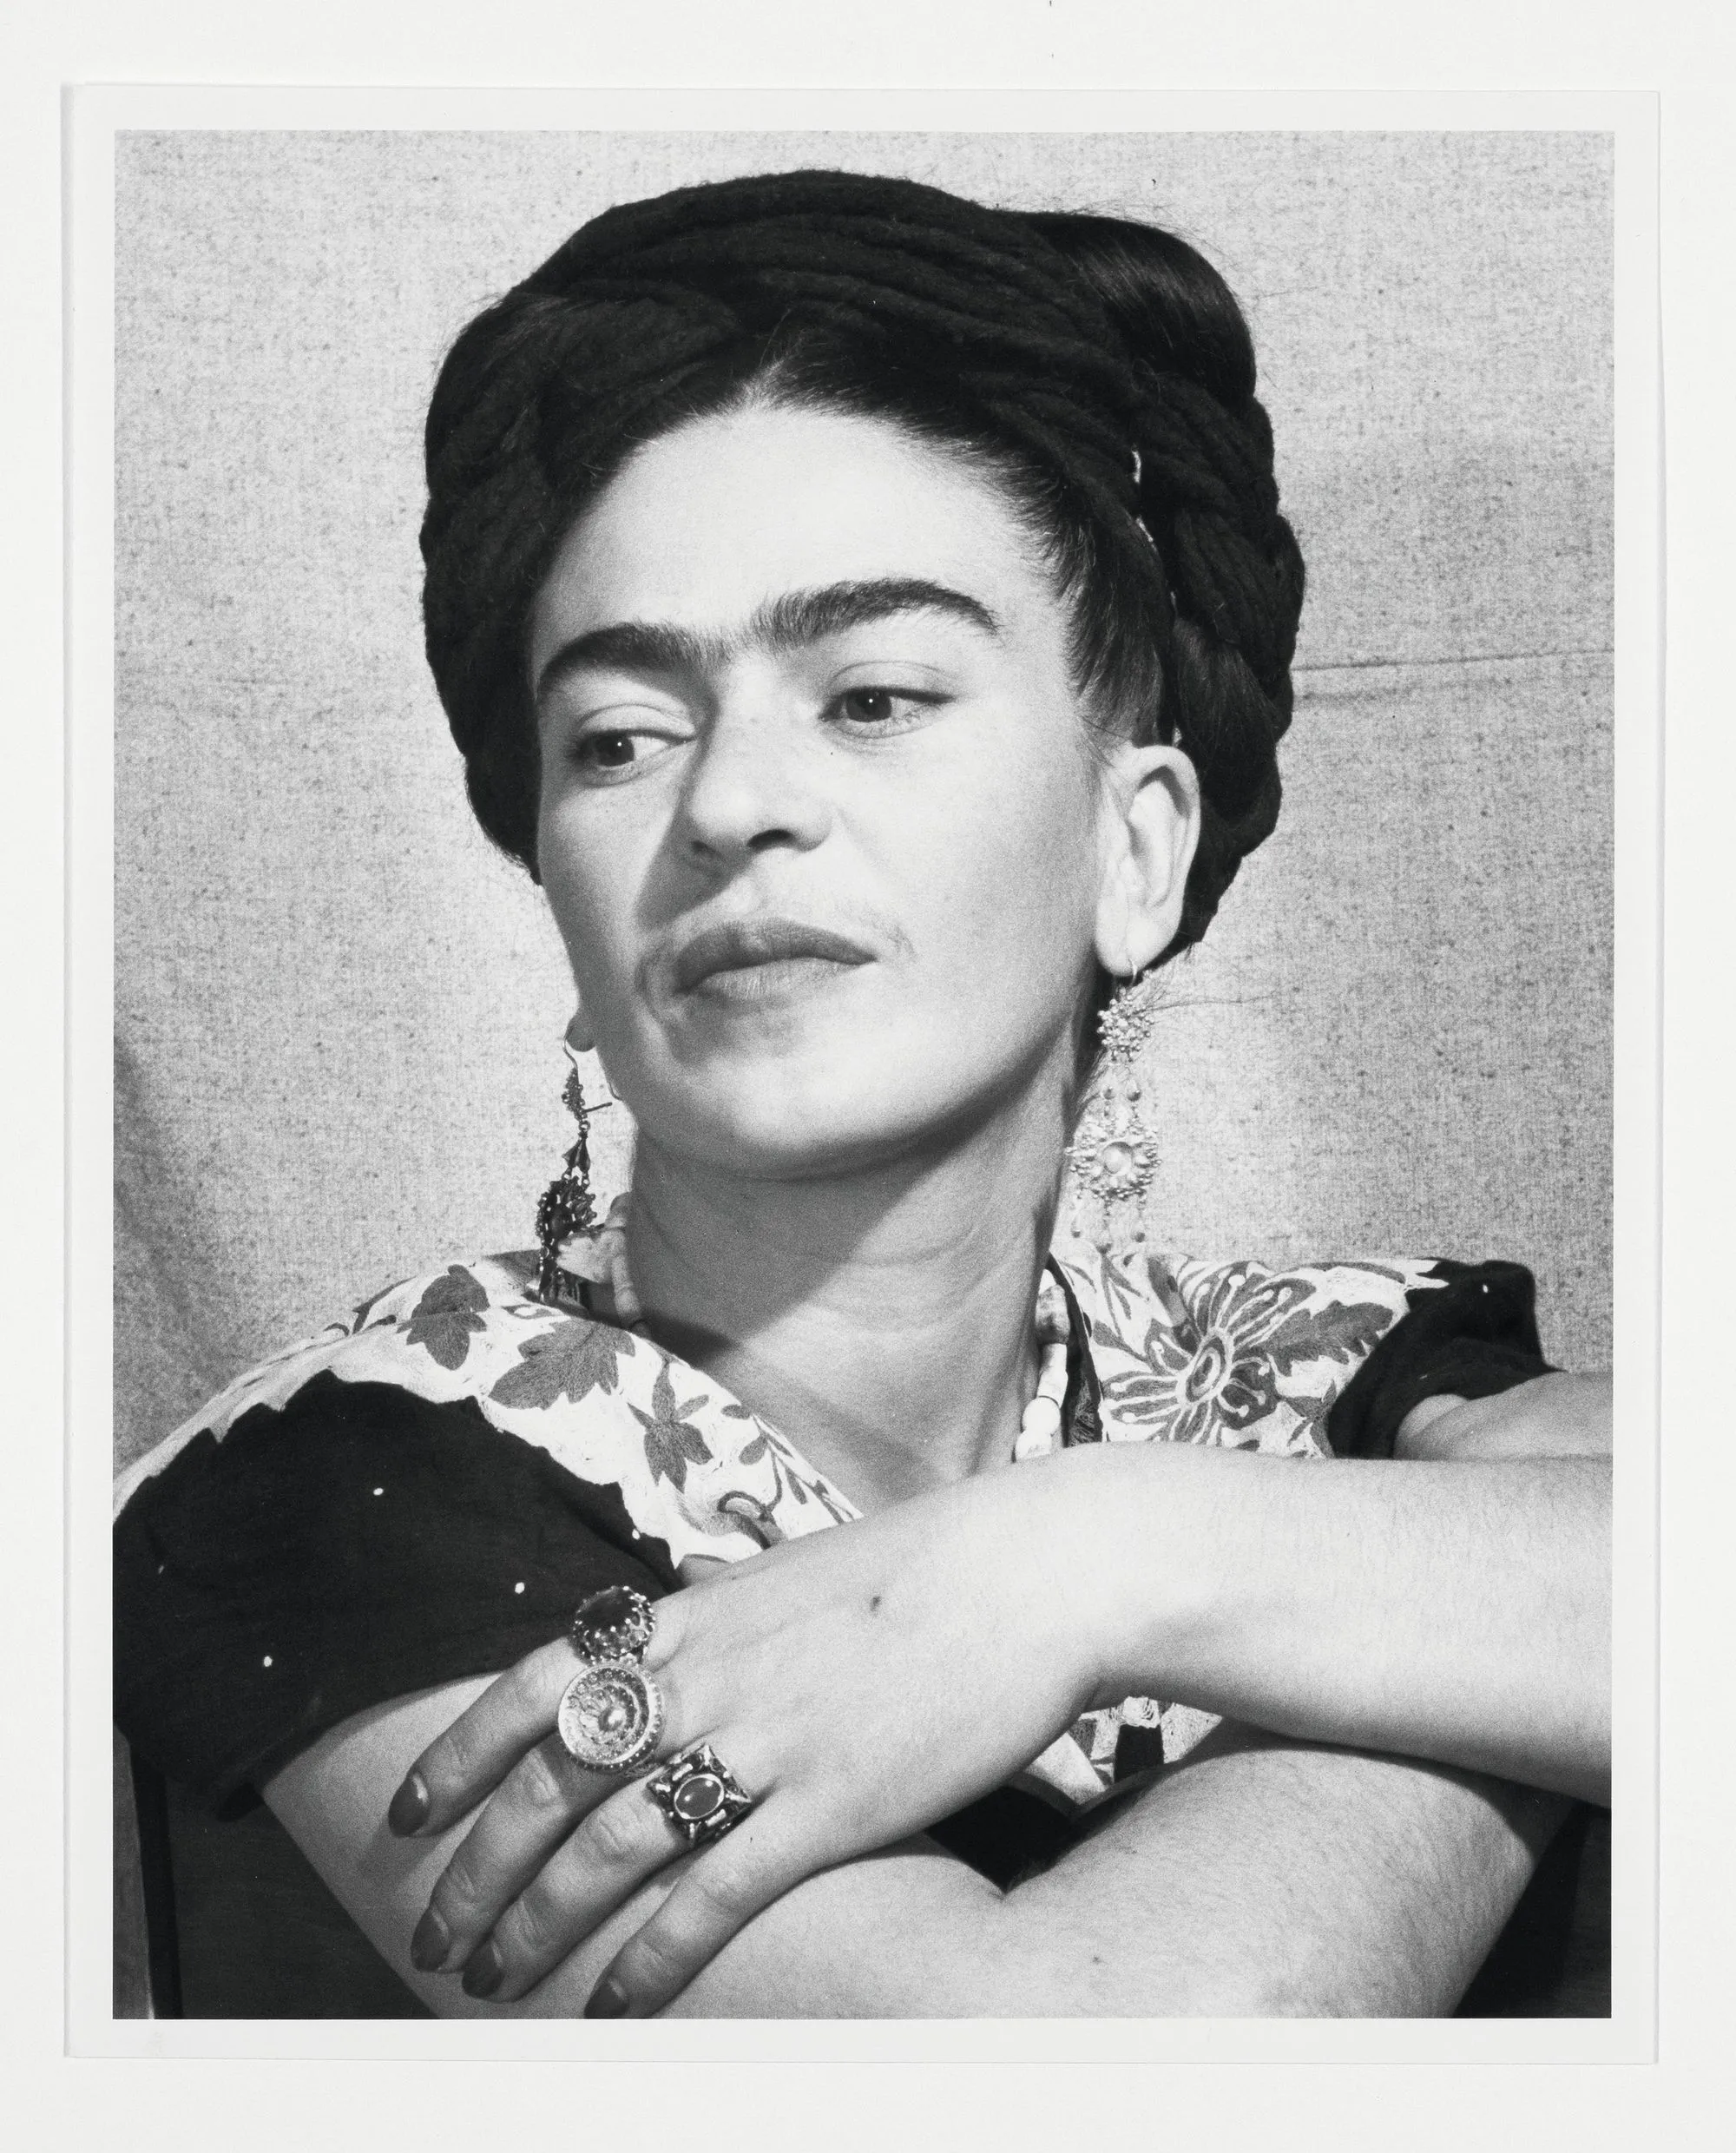 Bernard Silberstein, portrait de Frida Kahlo, artiste mexicaine, 1940, photographie, Detroit Institute of Arts, États-Unis.